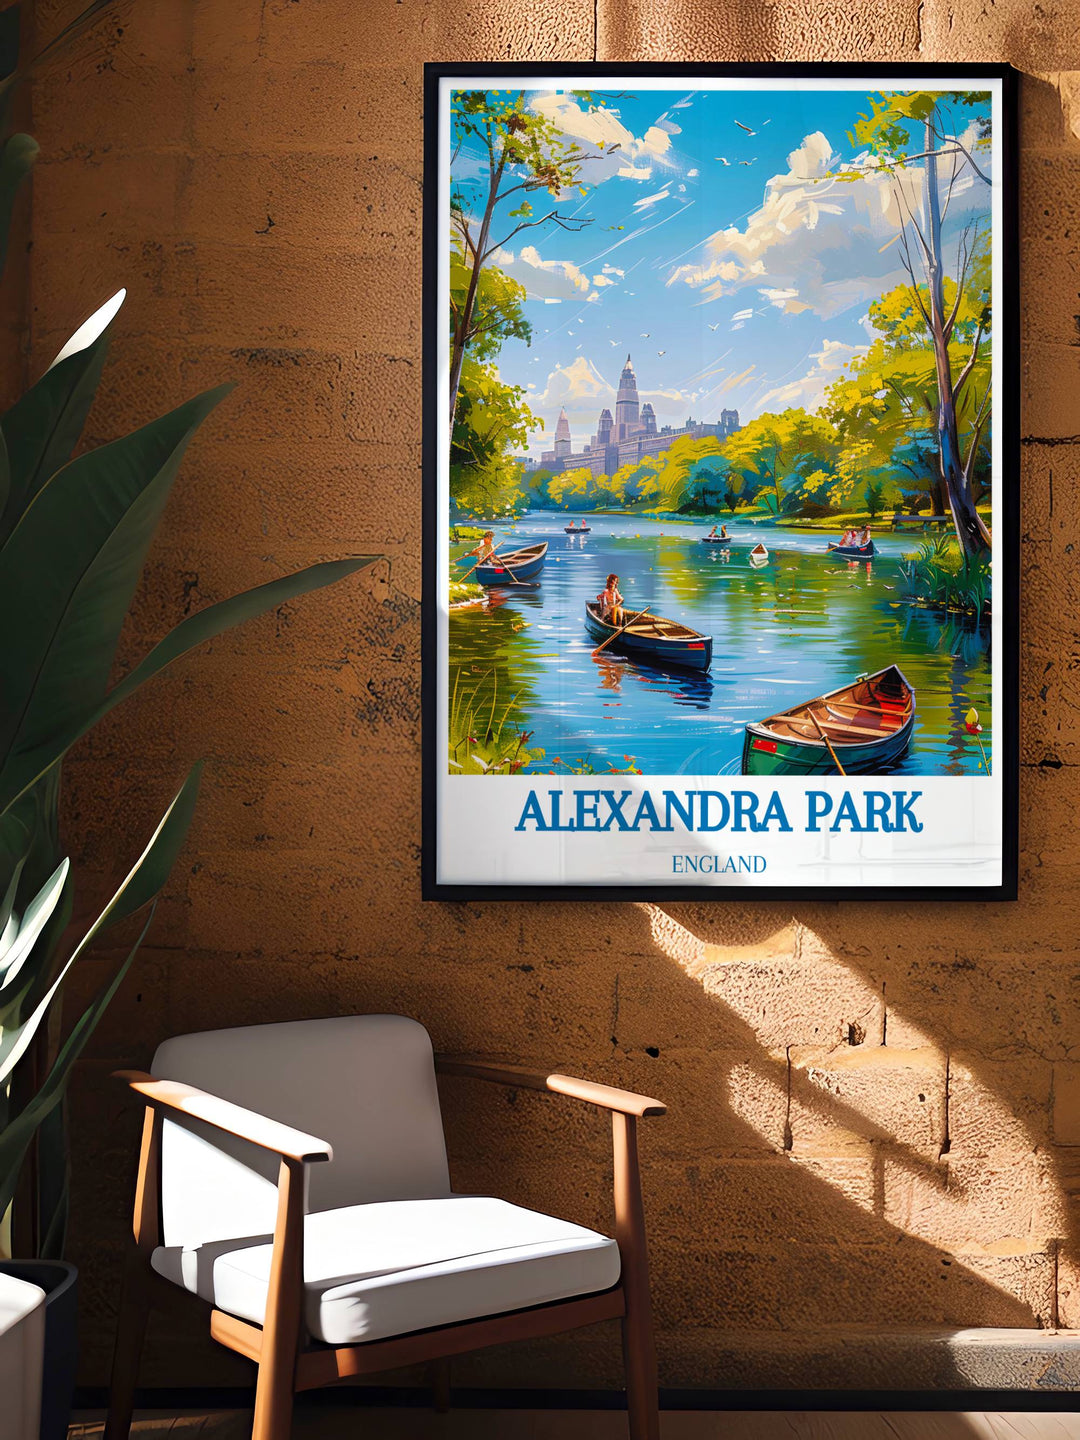 Alexandra Palace print capturing the iconic London landmark surrounded by the lush greenery of Alexandra Park.